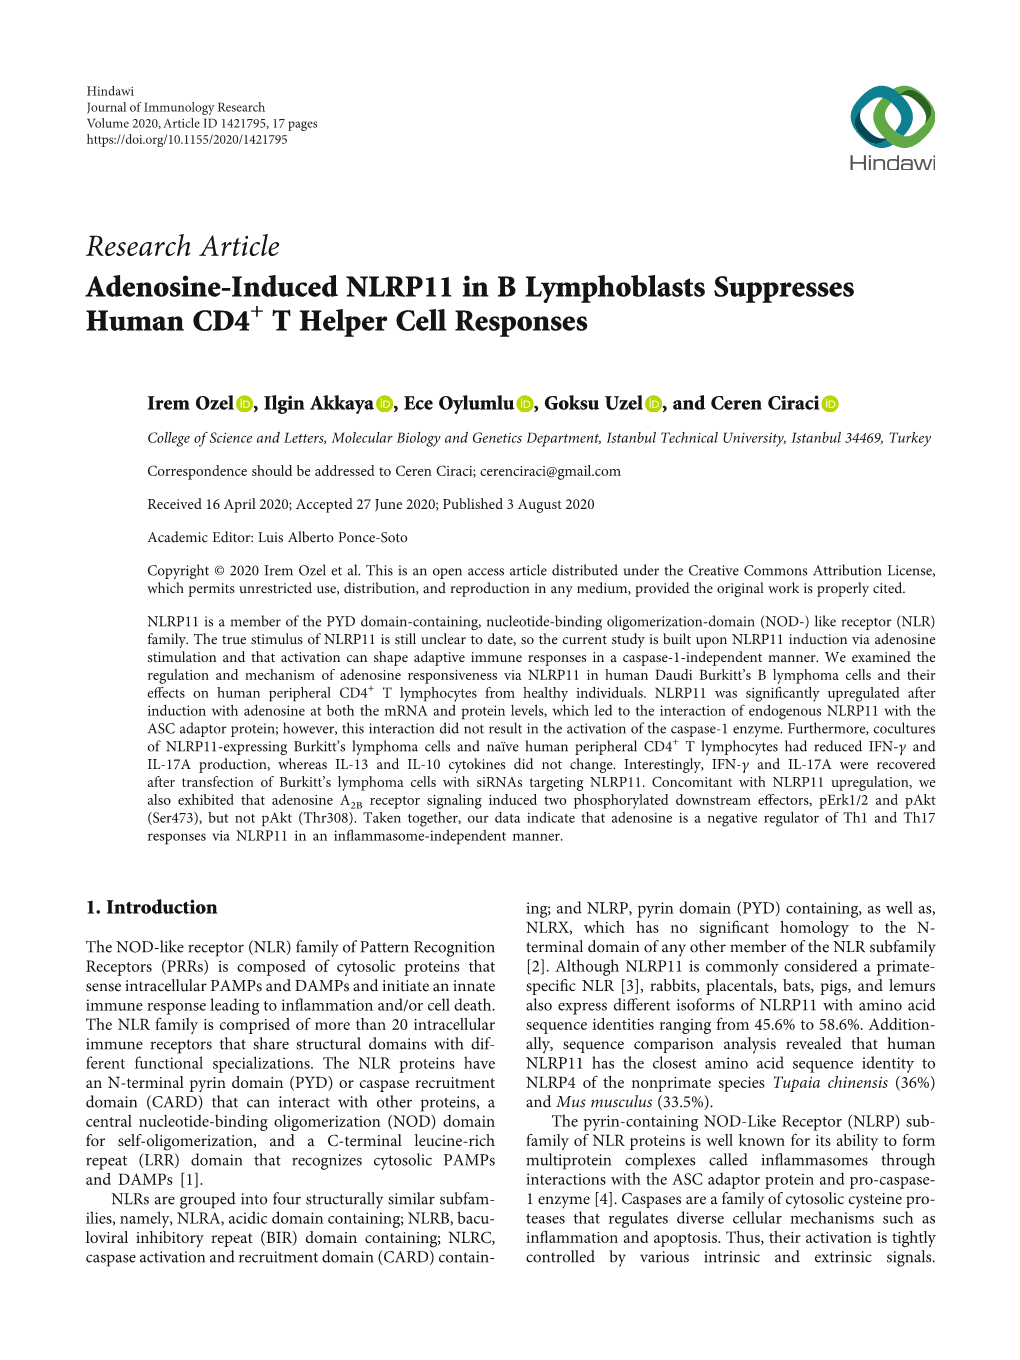 Adenosine-Induced NLRP11 in B Lymphoblasts Suppresses Human CD4+ T Helper Cell Responses